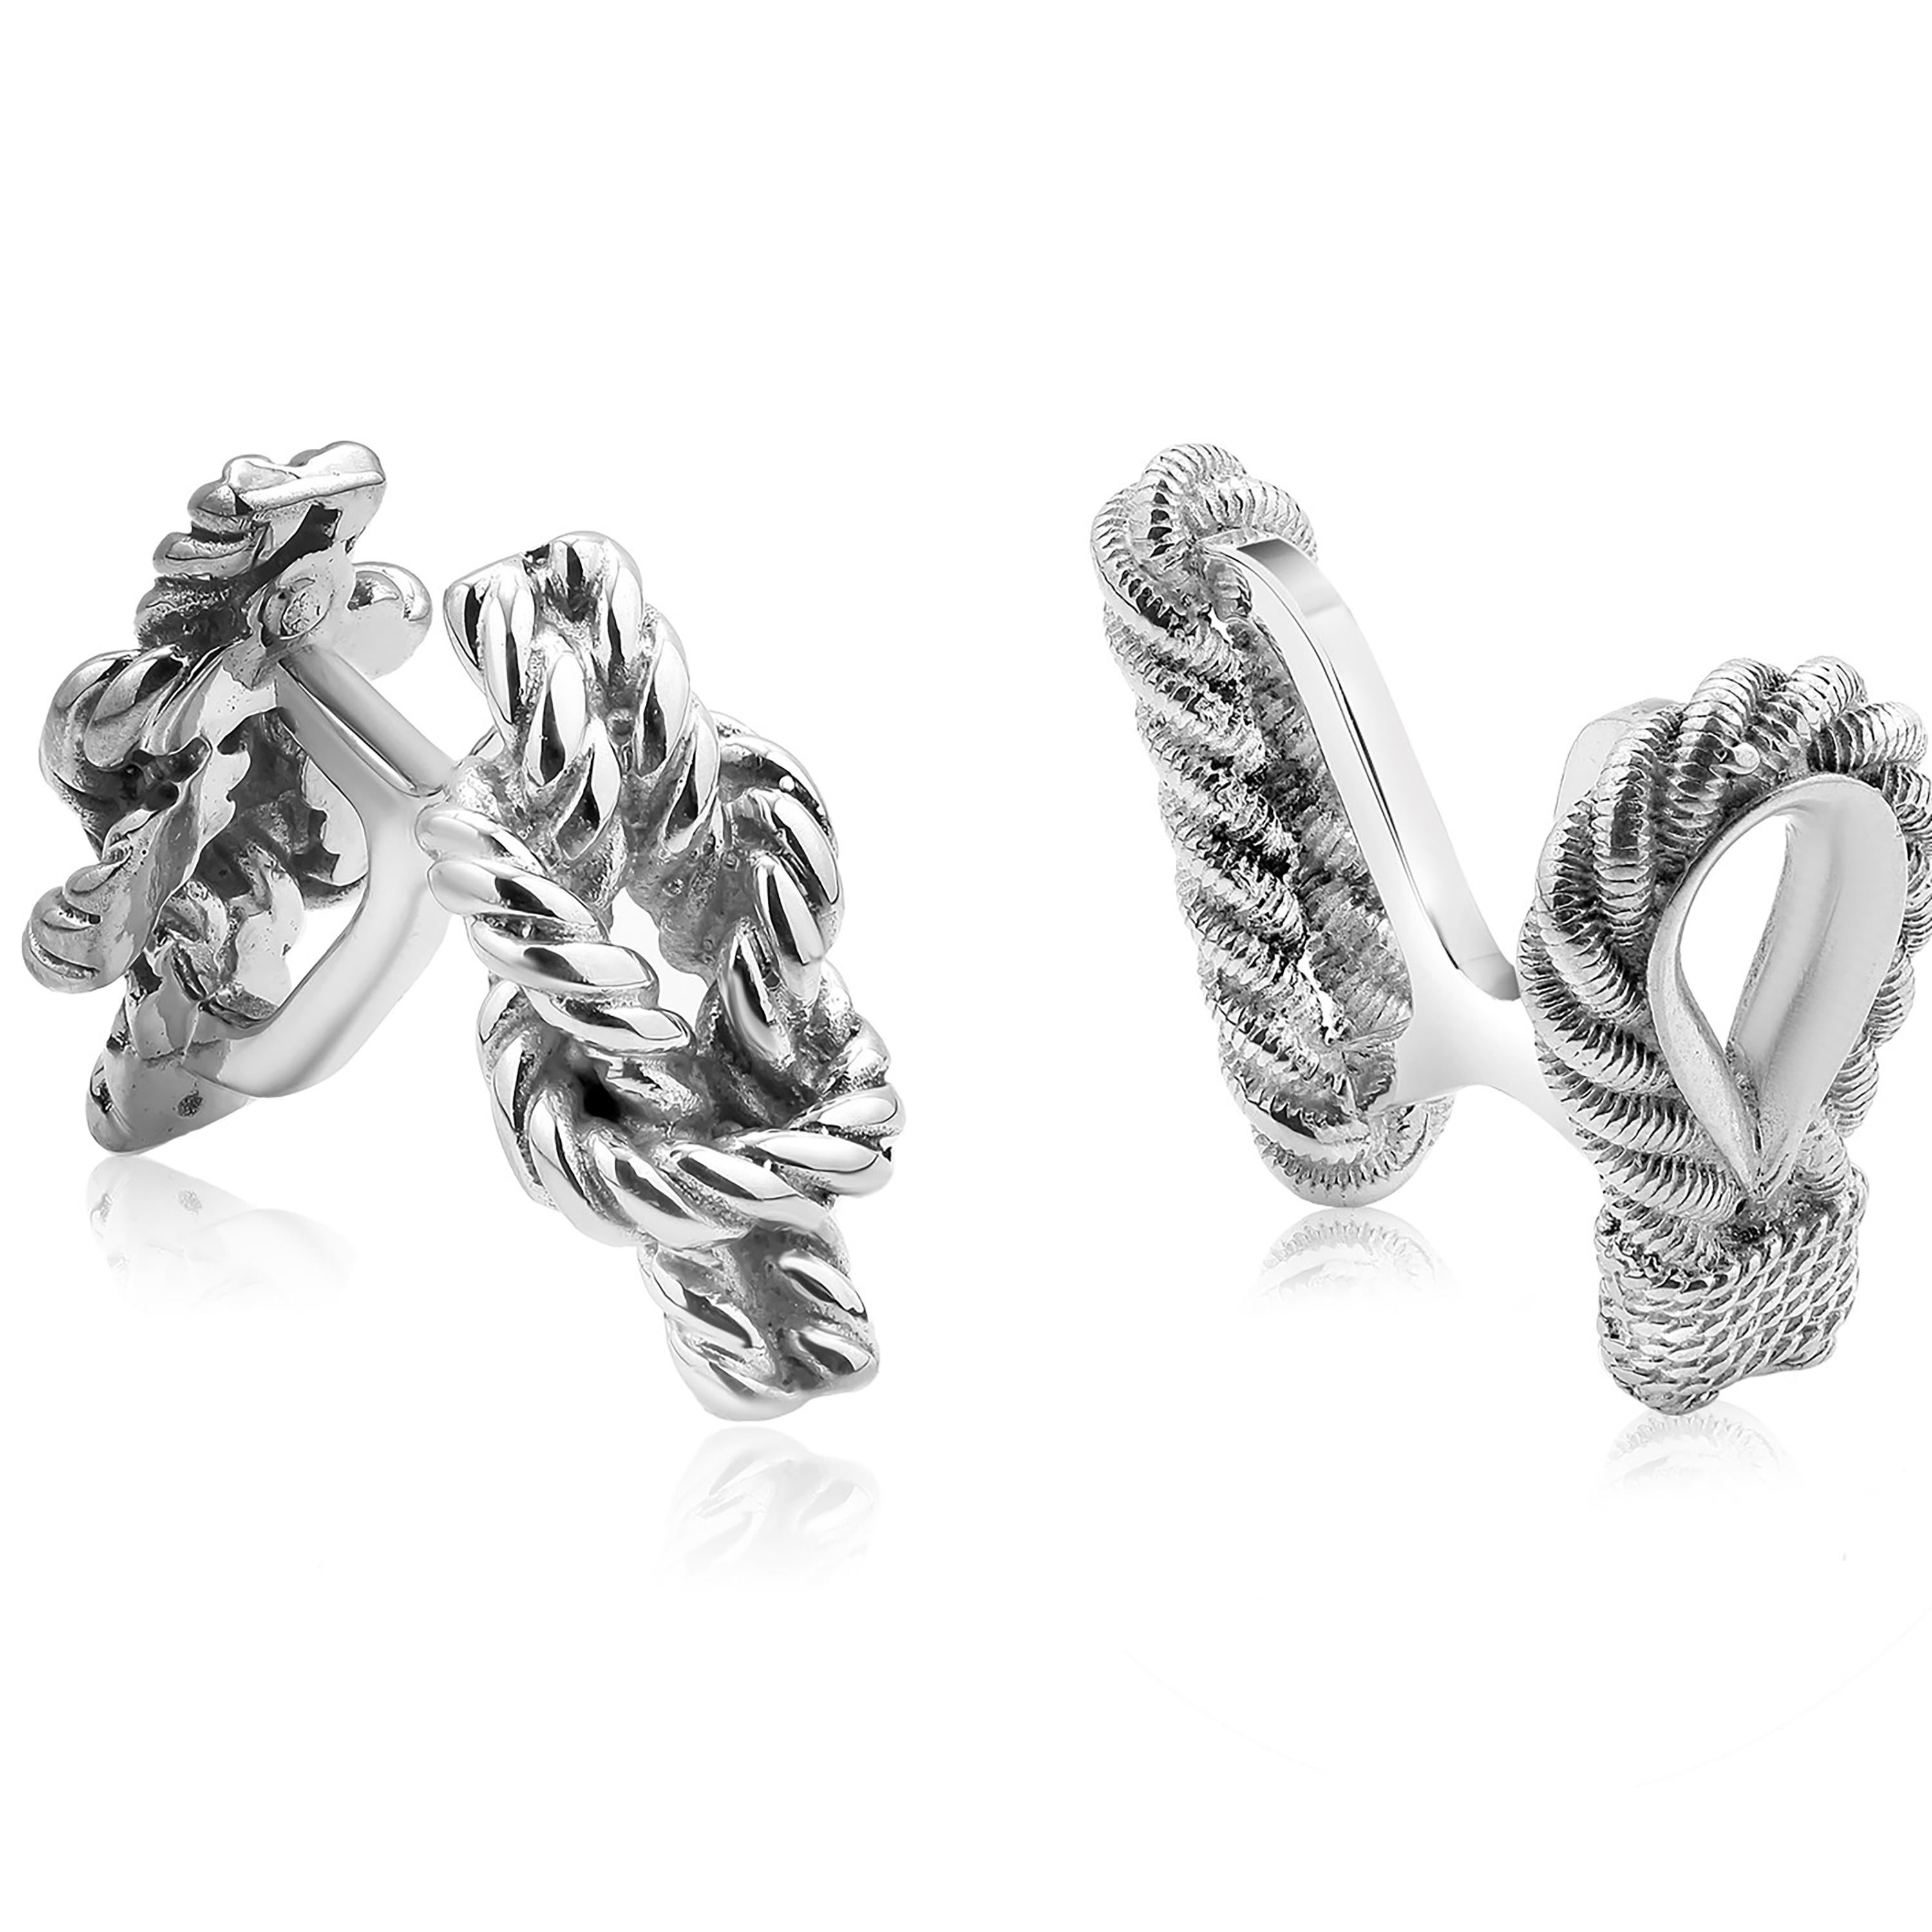 Vintage Hermès Mismatched Silver Cufflinks Stylizing Sailor Knots Twisted Loop Bon état - En vente à New York, NY